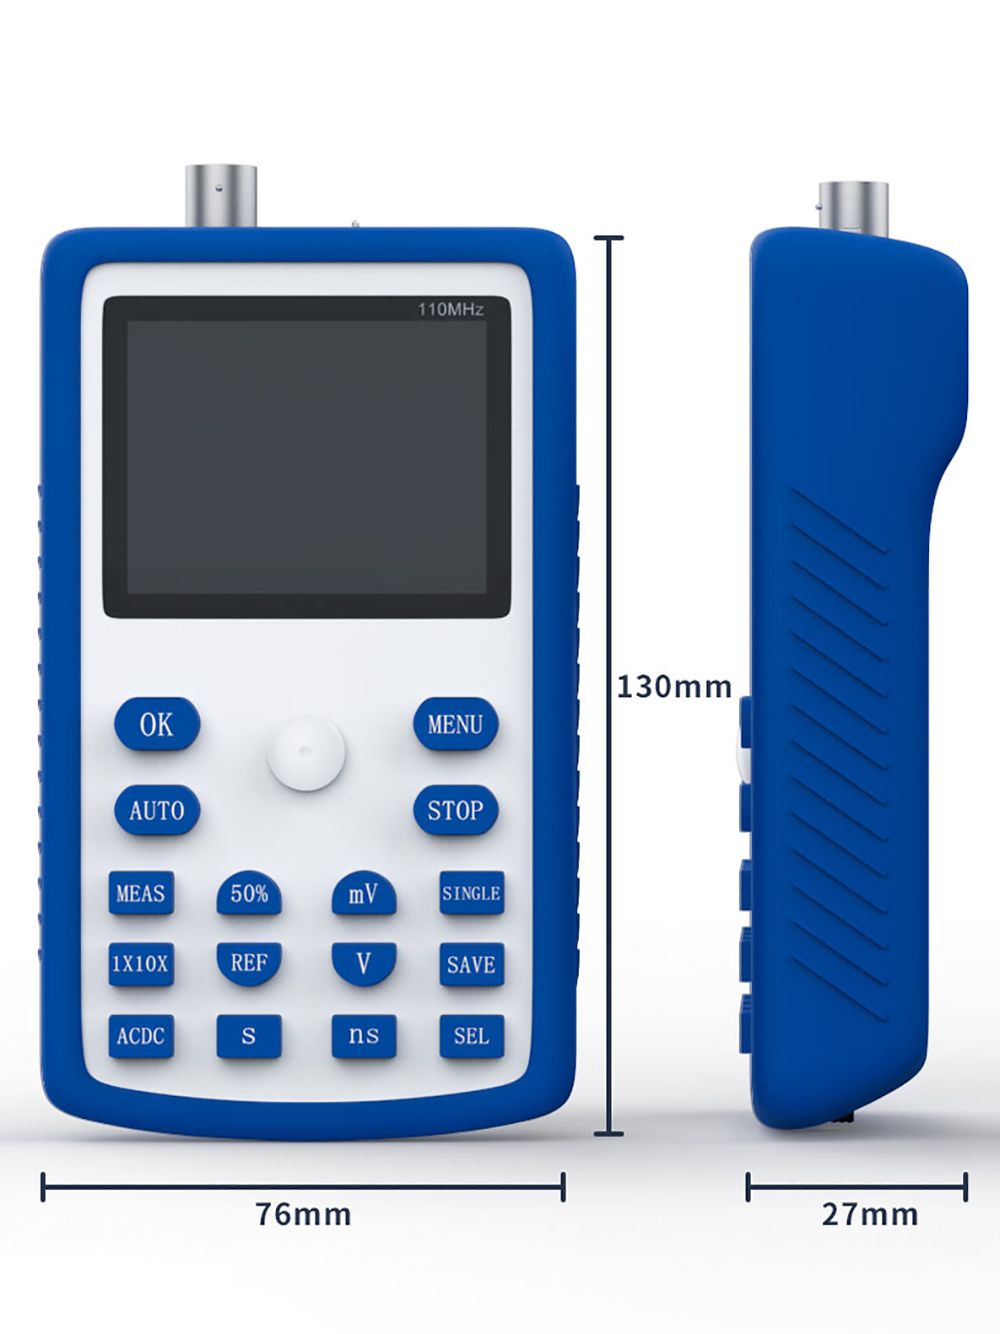 FNIRSI-1C15-Professional-Digital-Oscilloscope-500MSs-Sampling-Rate-110MHz-Analog-Bandwidth-Support-W-1757564